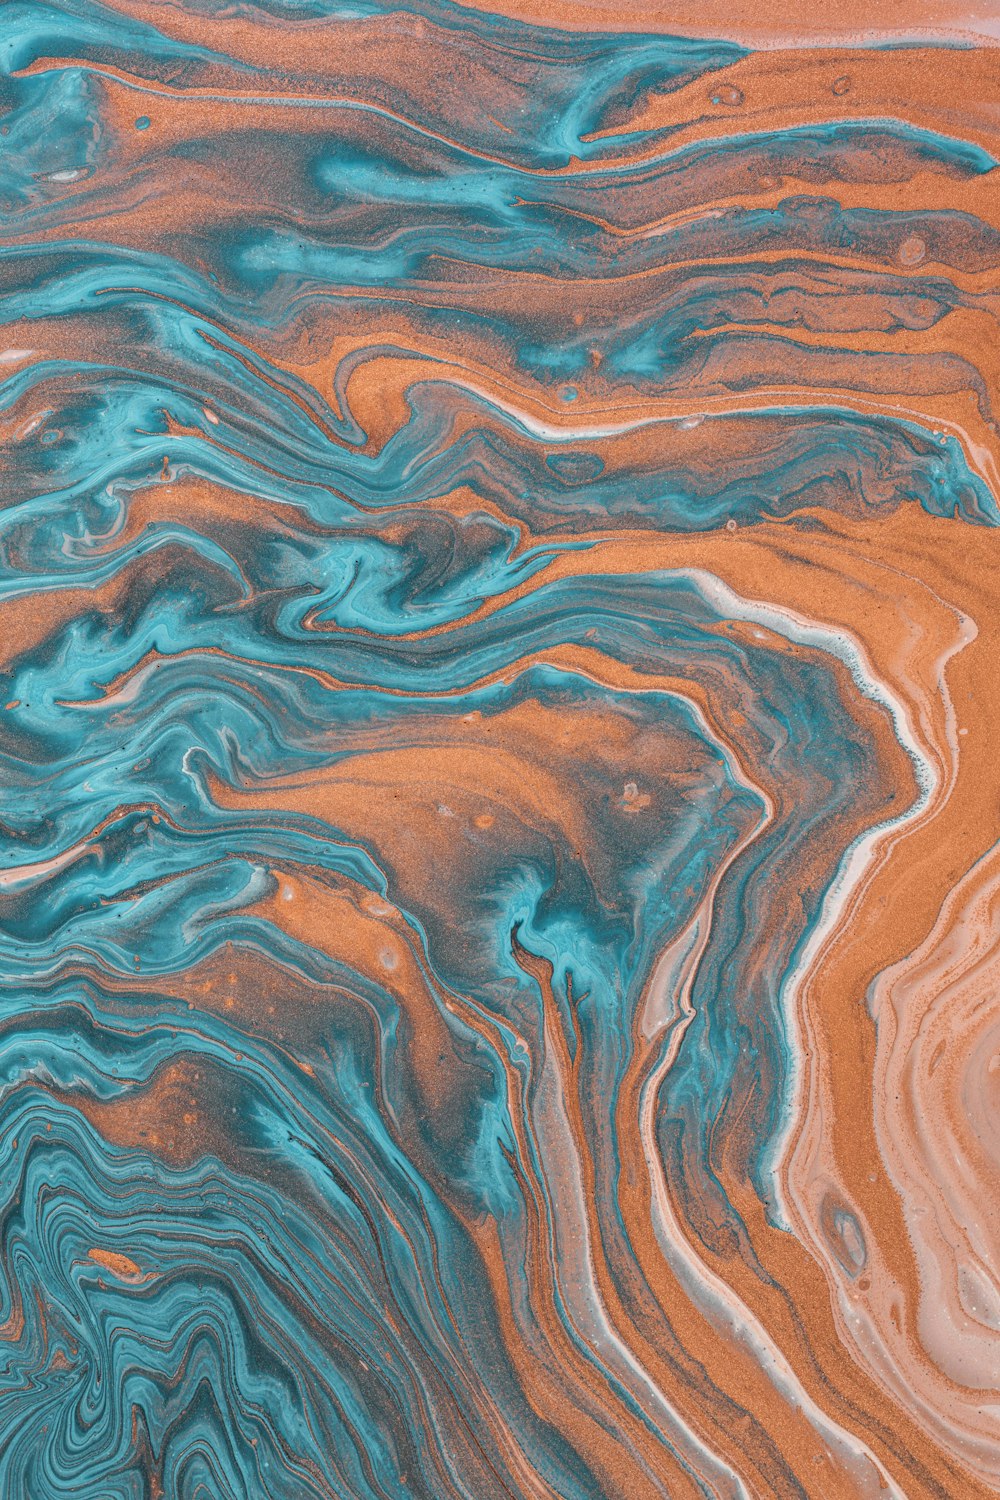 a close up of a blue and orange liquid